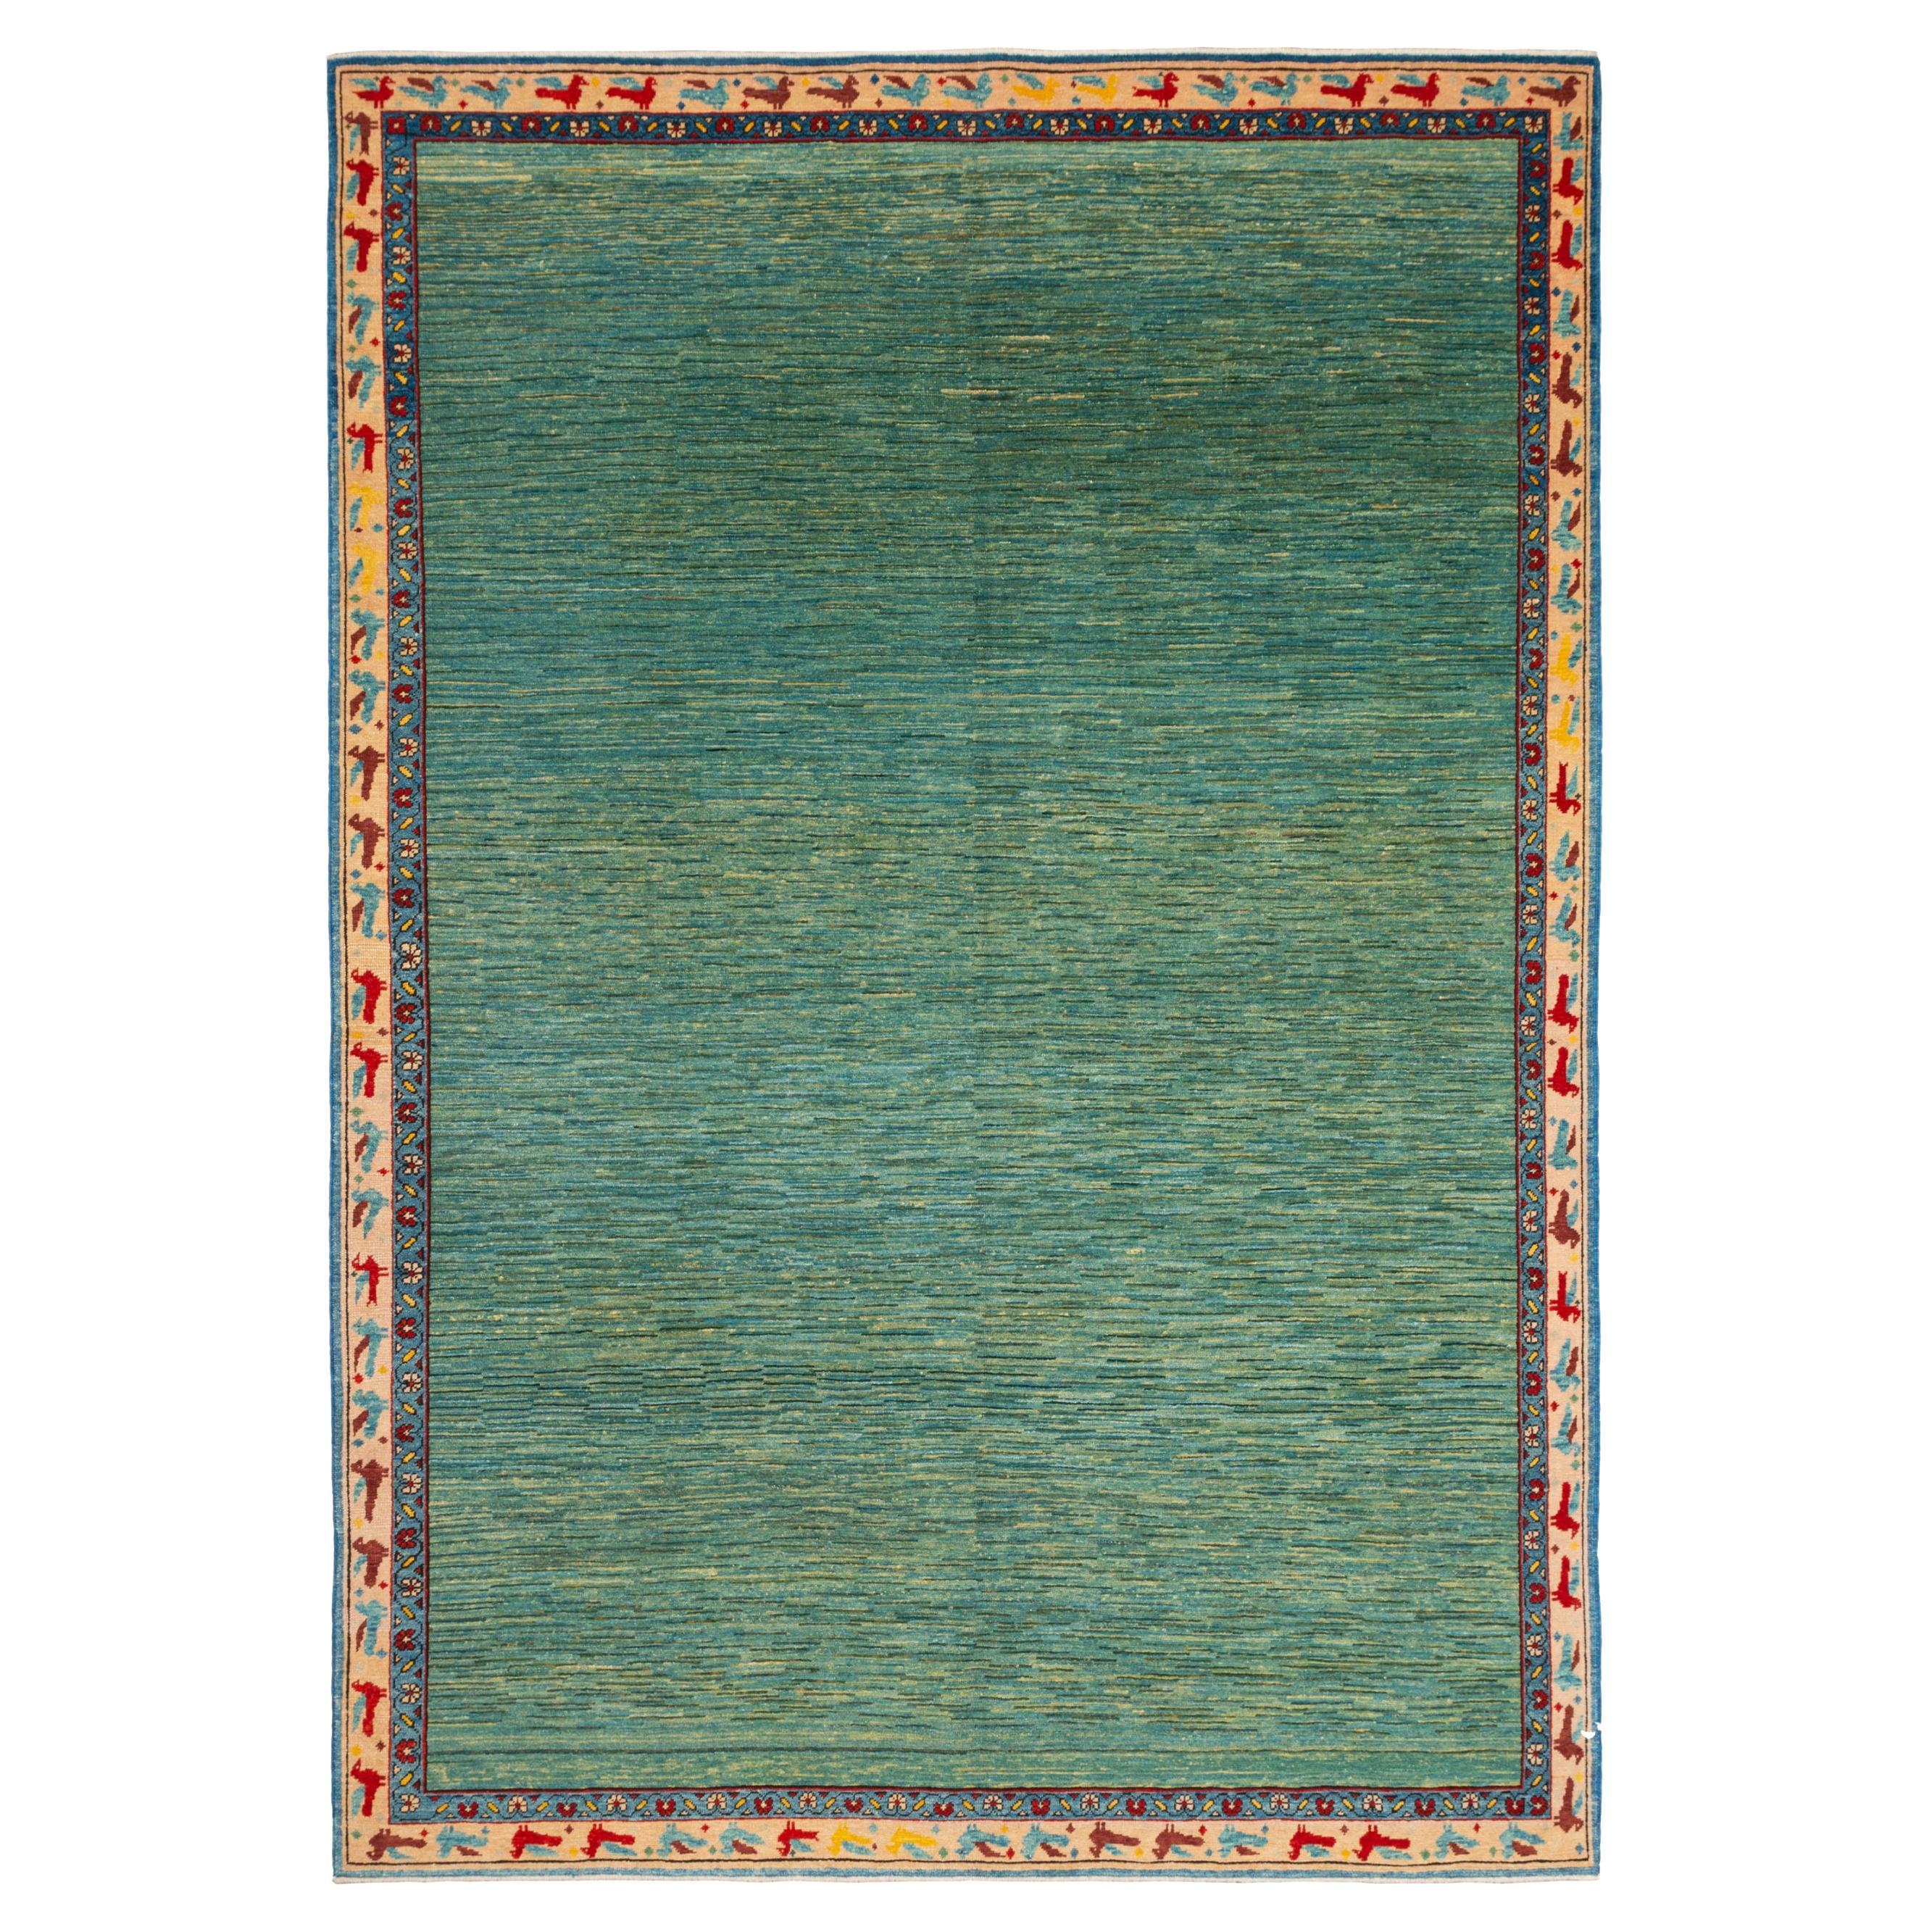 Ararat Rugs the Green Color Rug, Modern Impressionist River Carpet Natural Dyed